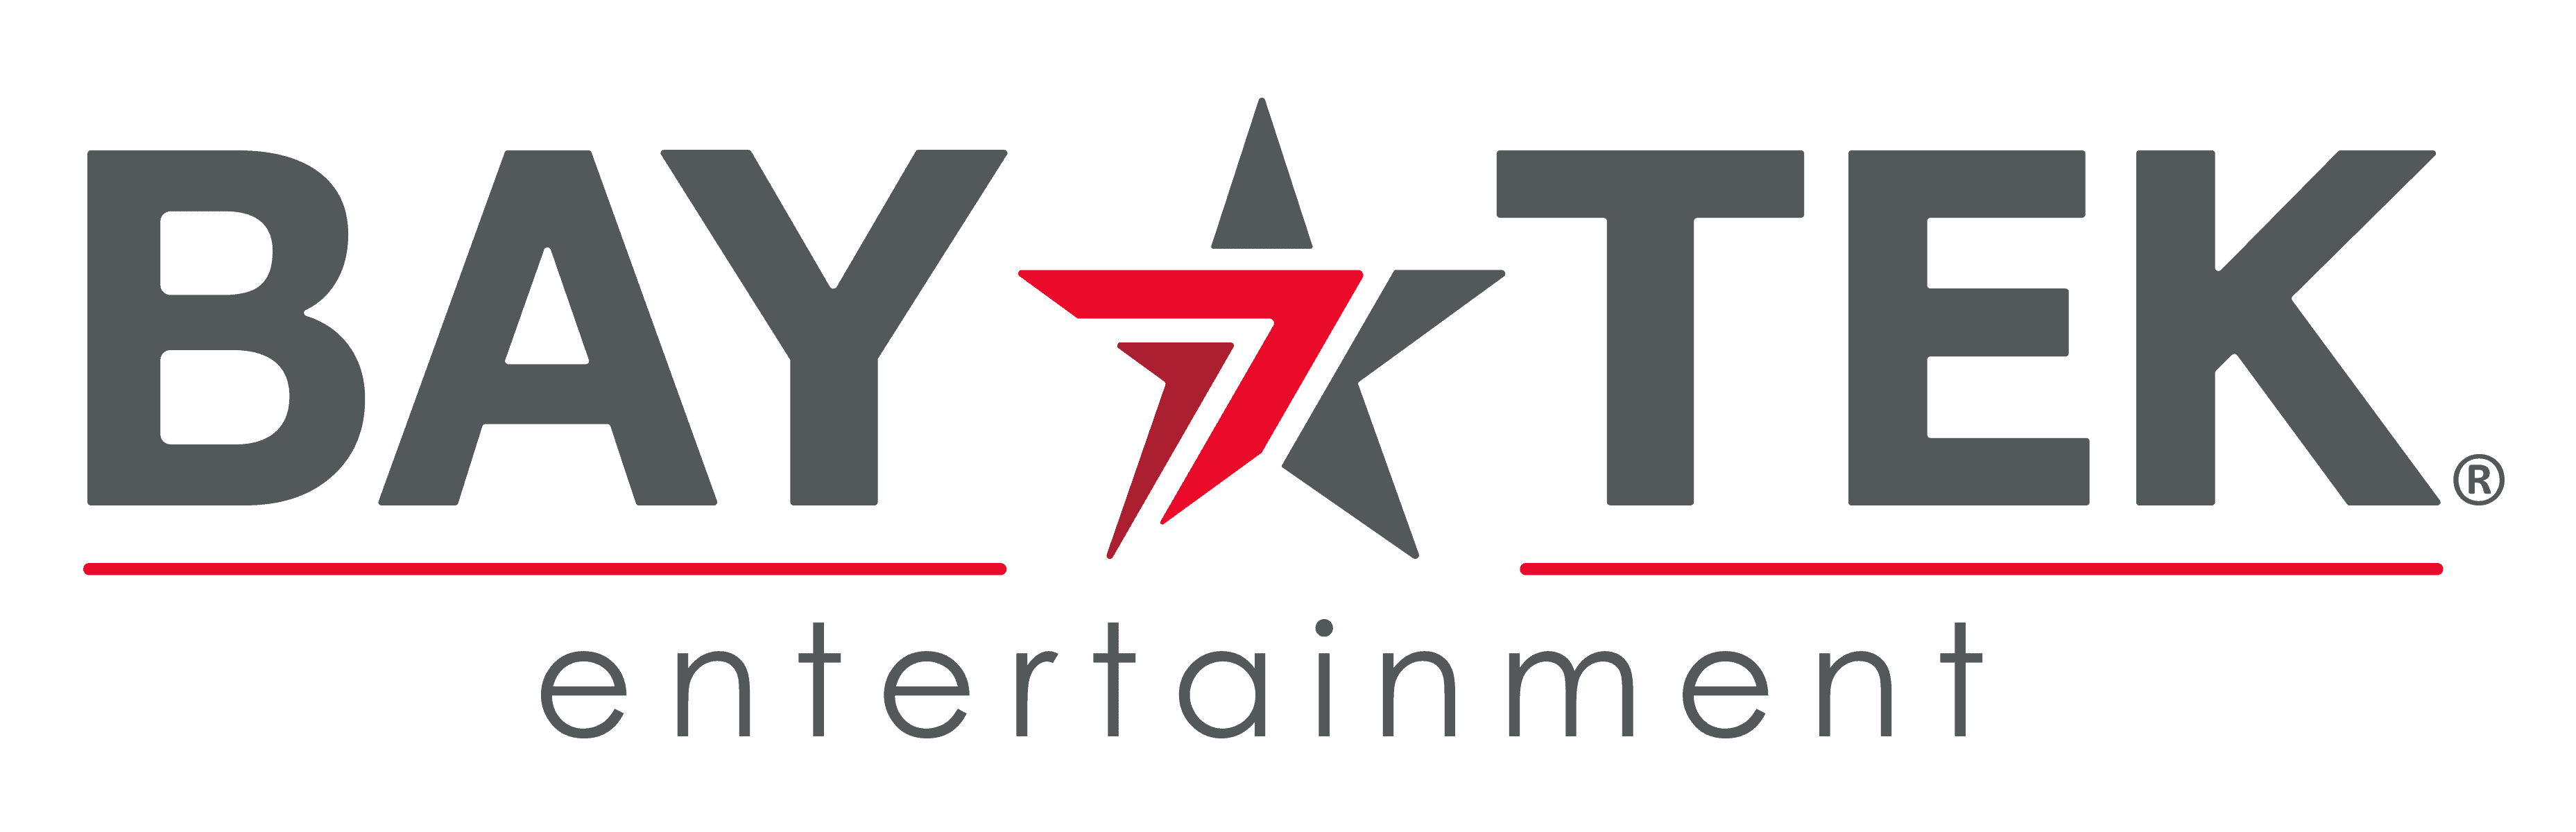 Bay Tek Entertainment Logo